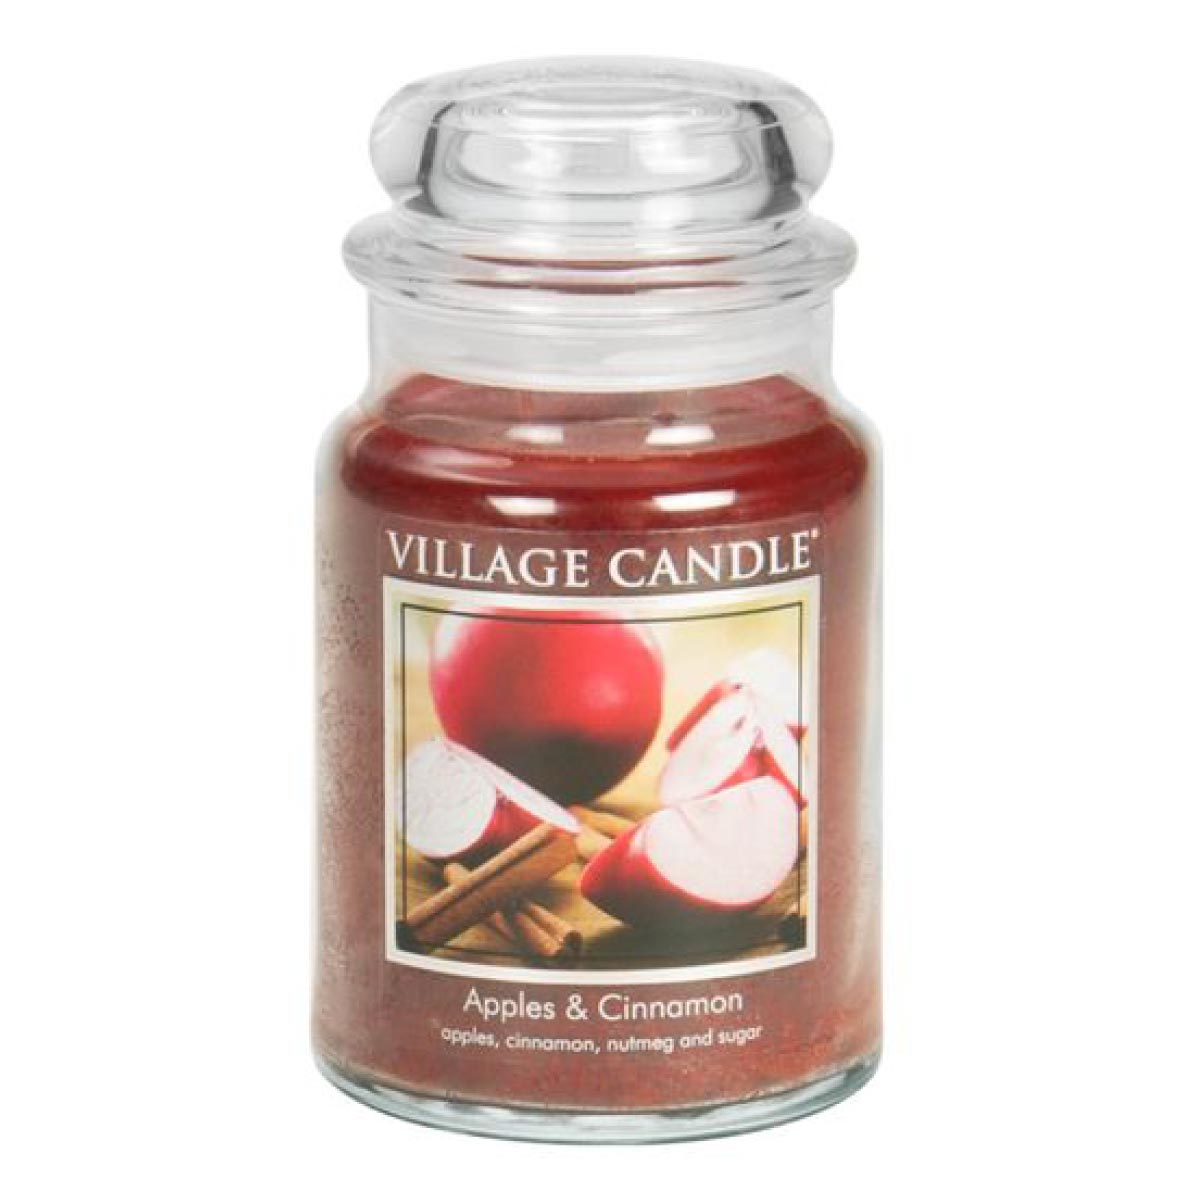 Apples & Cinnamon - Duftkerze im Glas 602g - Village Candle®